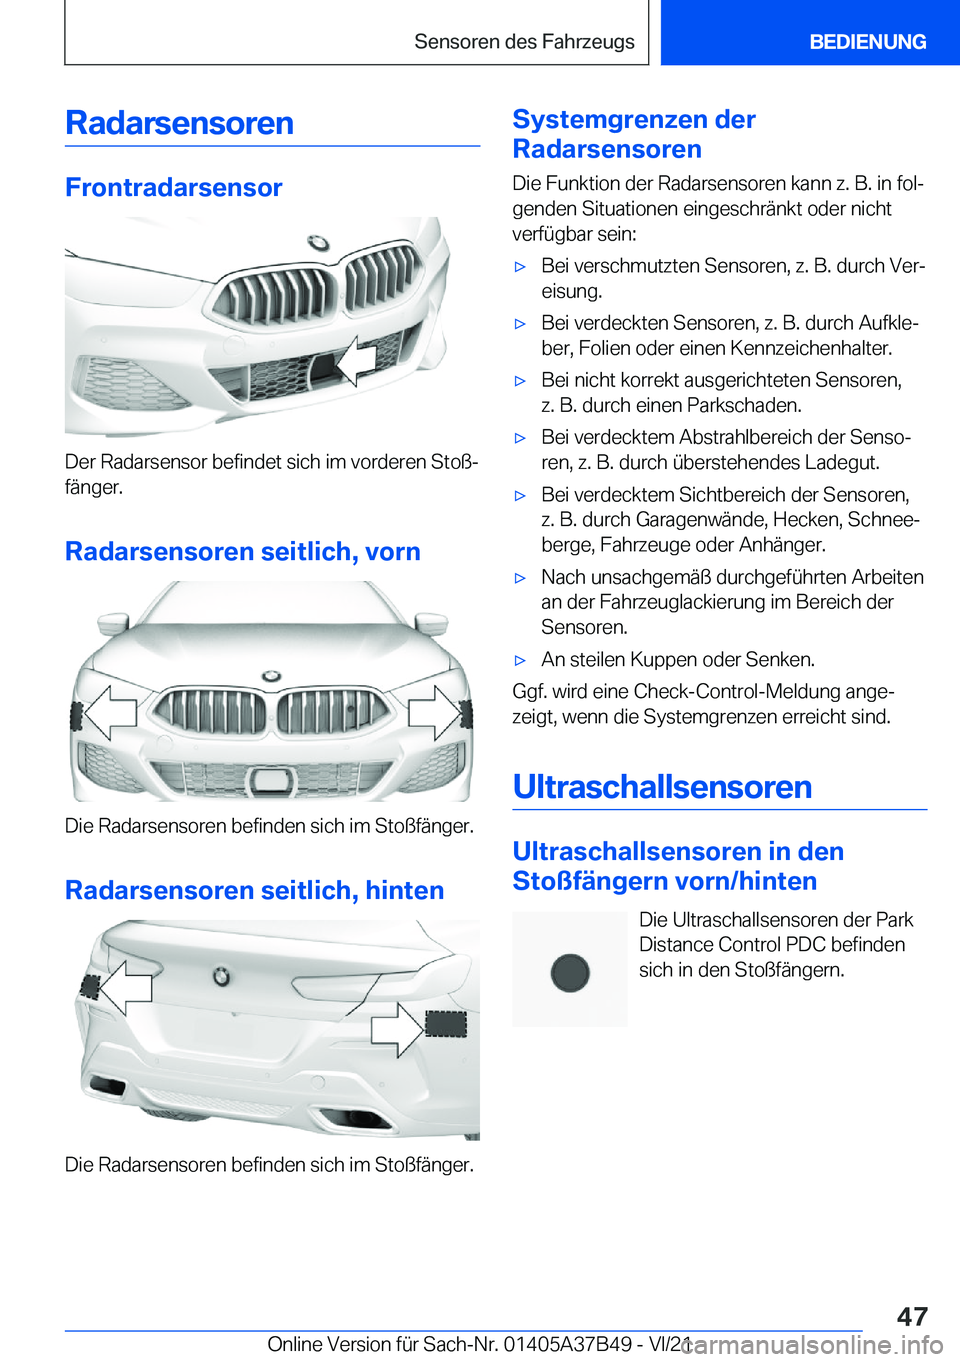 BMW M8 2022  Betriebsanleitungen (in German) �R�a�d�a�r�s�e�n�s�o�r�e�n
�F�r�o�n�t�r�a�d�a�r�s�e�n�s�o�r
�D�e�r��R�a�d�a�r�s�e�n�s�o�r��b�e�f�i�n�d�e�t��s�i�c�h��i�m��v�o�r�d�e�r�e�n��S�t�o�